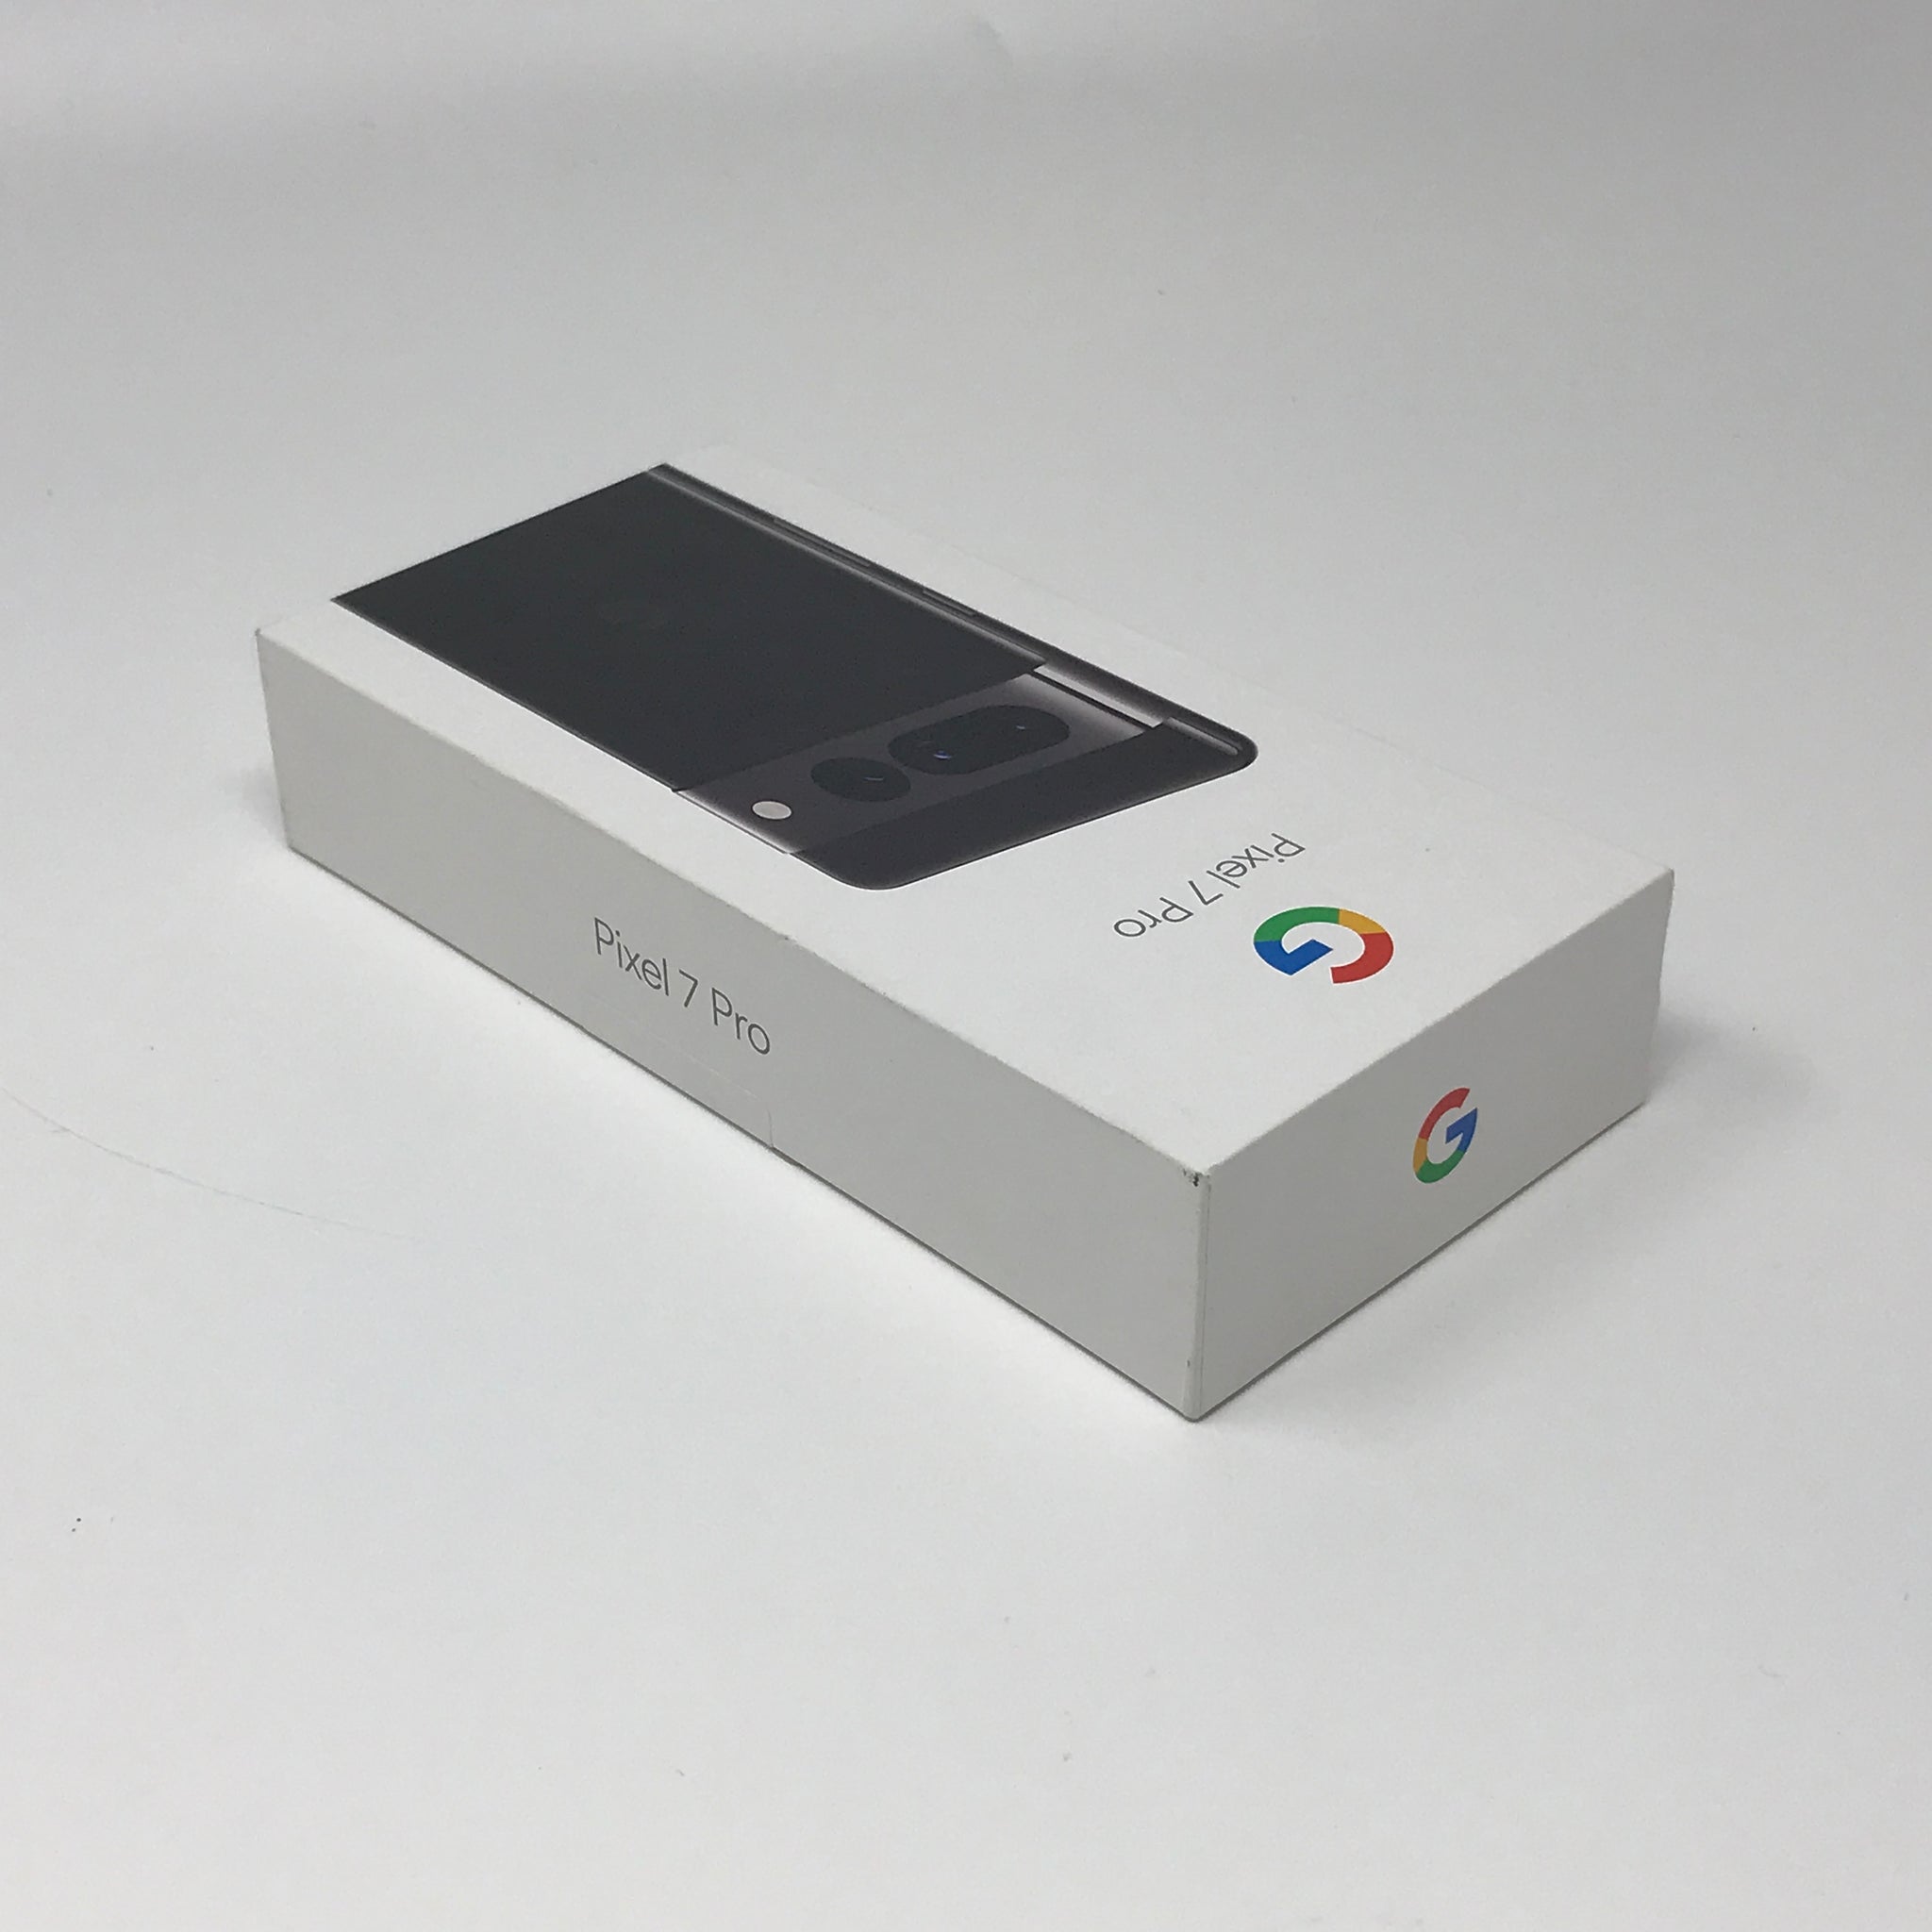 Google Pixel 7 Pro - 256GB - Obsidian (Unlocked) at best price in New Delhi